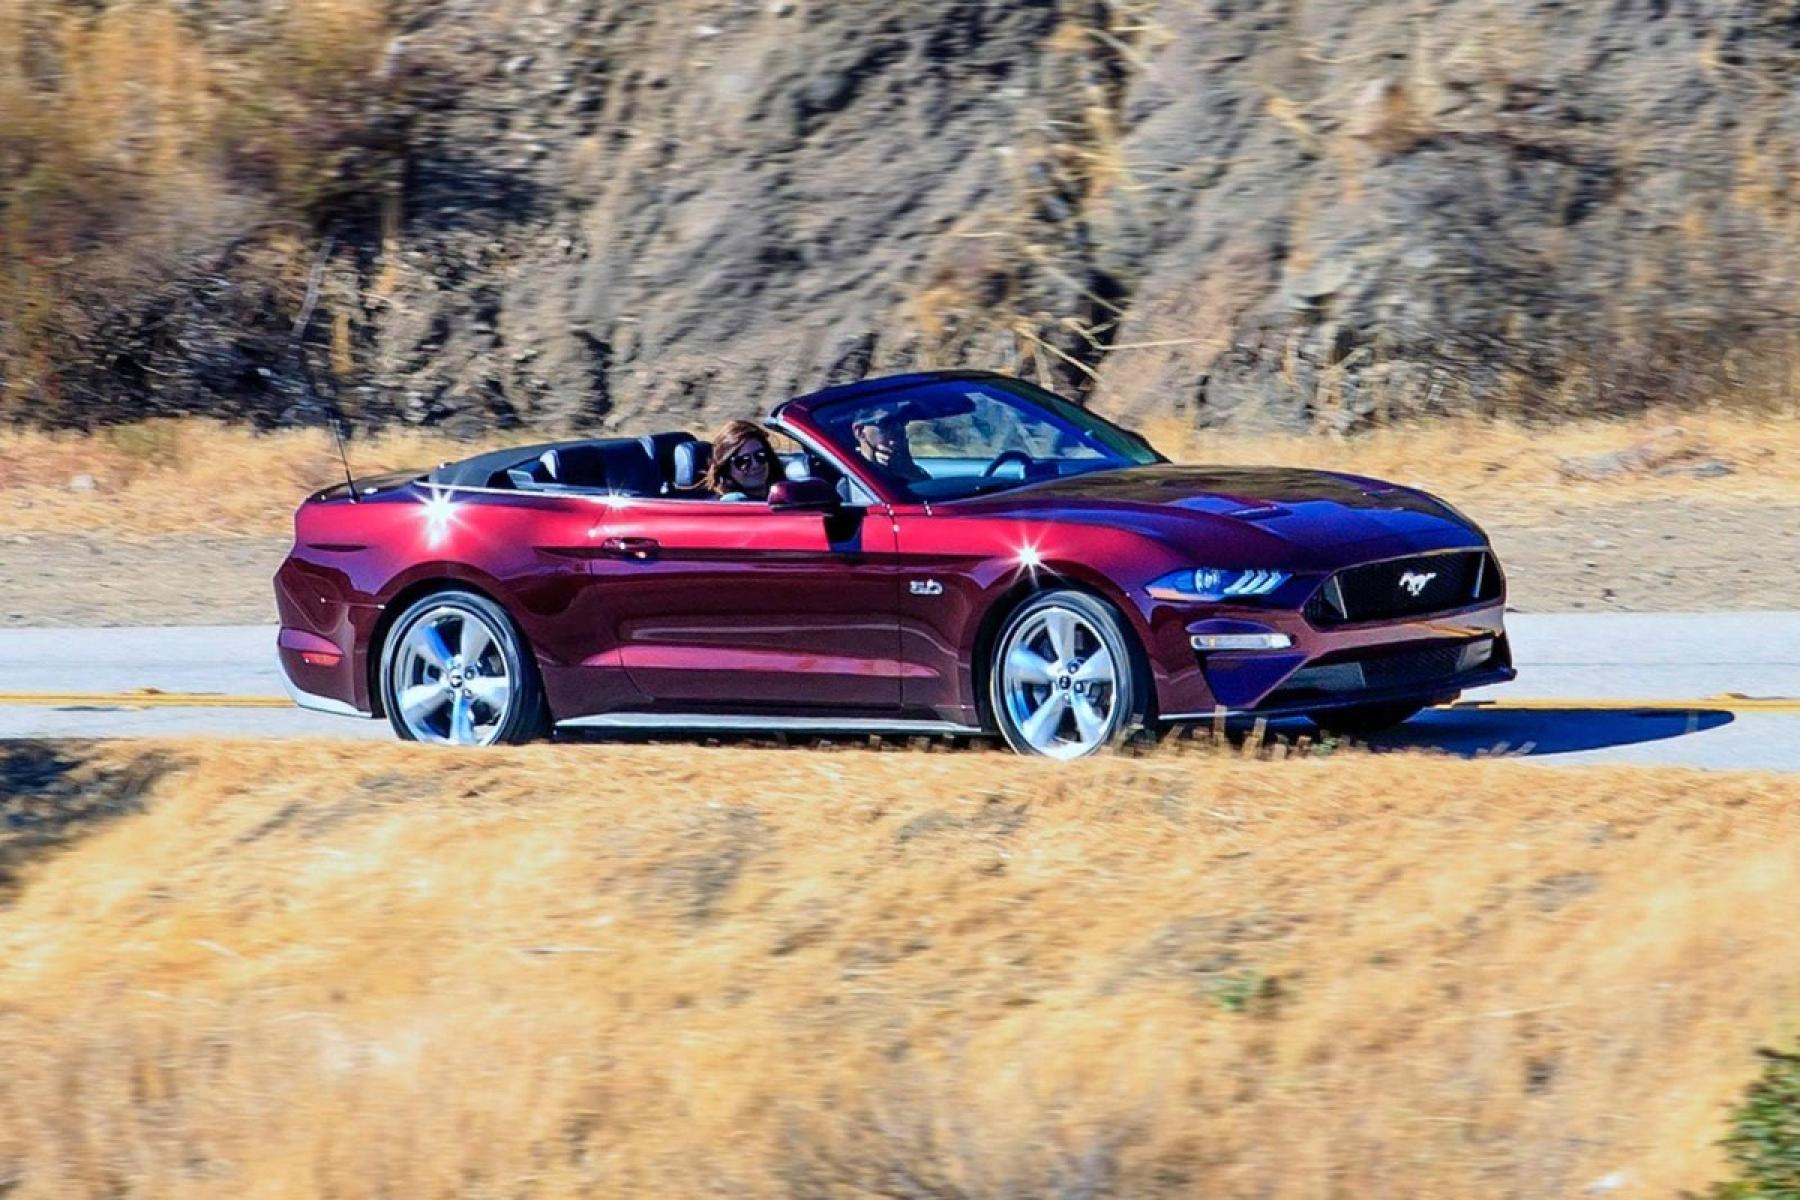 2020 Burgundy /Black Ford Mustang GT Convertible (1FATP8FF9L5) with an 5.0L V8 DOHC 32V engine, Automatic transmission, located at 3160 South Valley View Blvd, Las Vegas, NV, 89146, (888) 750-6845, 36.132458, -115.190247 - b64:SW4gc29tZSB3YXlzLCB0aGUgMjAyMCBGb3JkIE11c3RhbmcgaXMganVzdCBhcyB5b3UnZCBleHBlY3QgaXQgdG8gYmUuIEl0IGhhcyByZWFyLXdoZWVsIGRyaXZlLCBhbiBhdmFpbGFibGUgNS4wLWxpdGVyIFY4IHVuZGVyIHRoZSBob29kLCBhbmQgYWxsIHNvcnRzIG9mIGZhY3Rvcnkgb3B0aW9ucyB0byBtYWtlIGl0IGZhc3RlciwgbG91ZGVyLCBhbmQgbW9yZSBkaXN0aW5jdGl2ZS4gV2hh - Photo #3